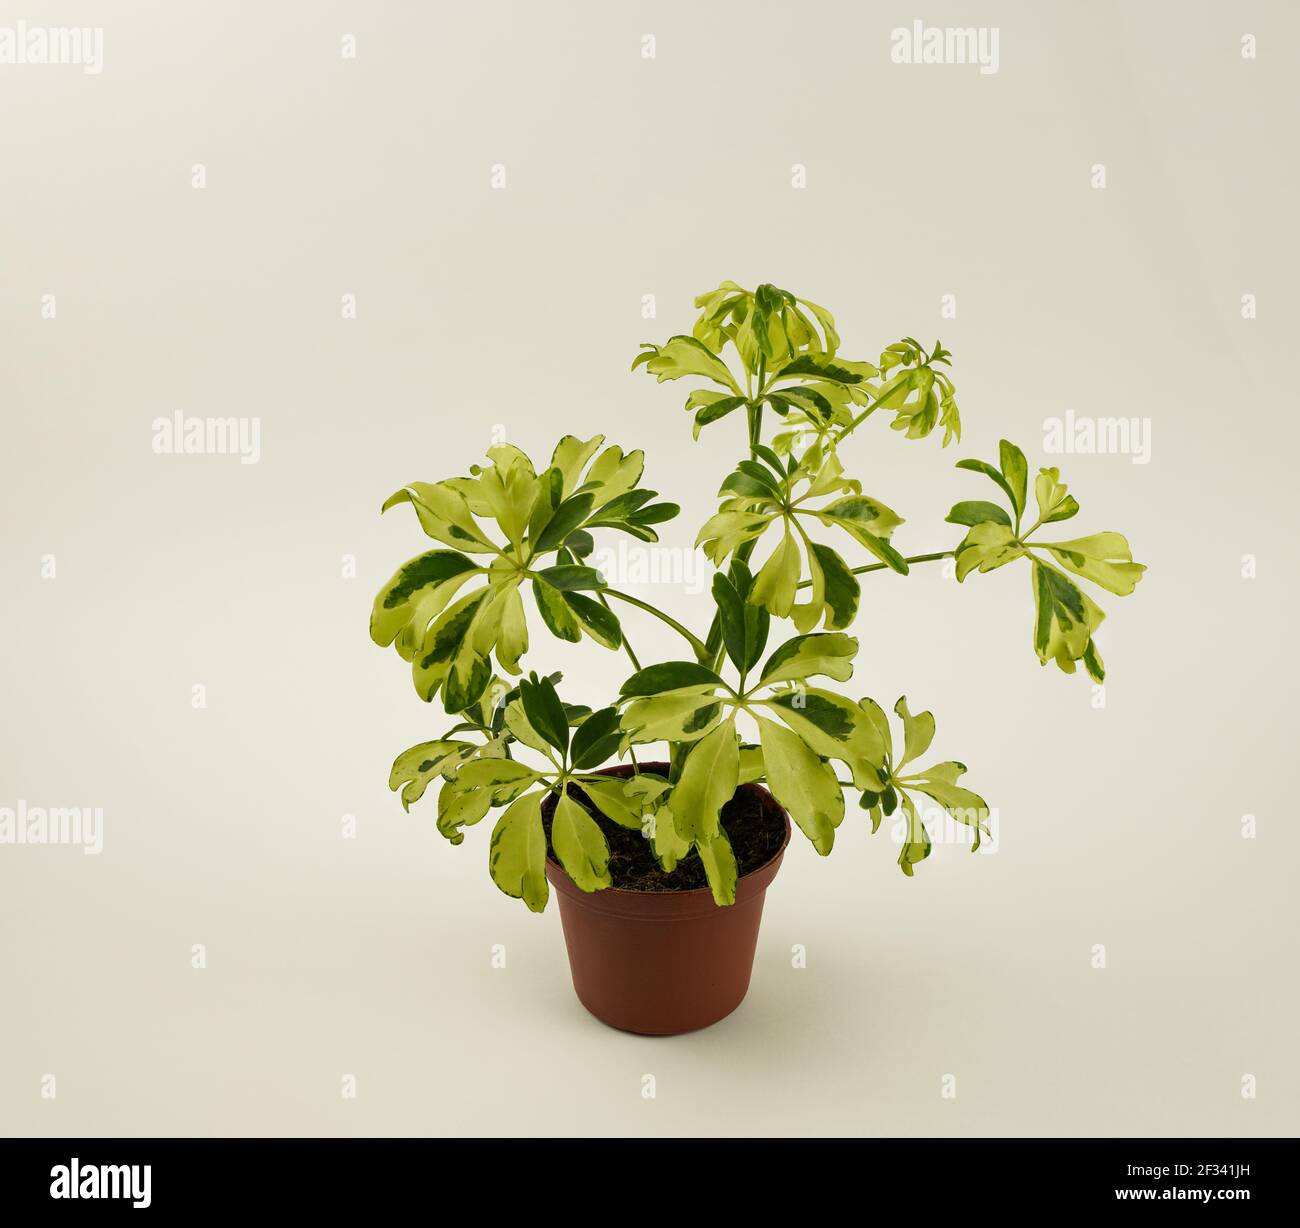 schefflera arboricola in pot with white background, top view Stock Photo